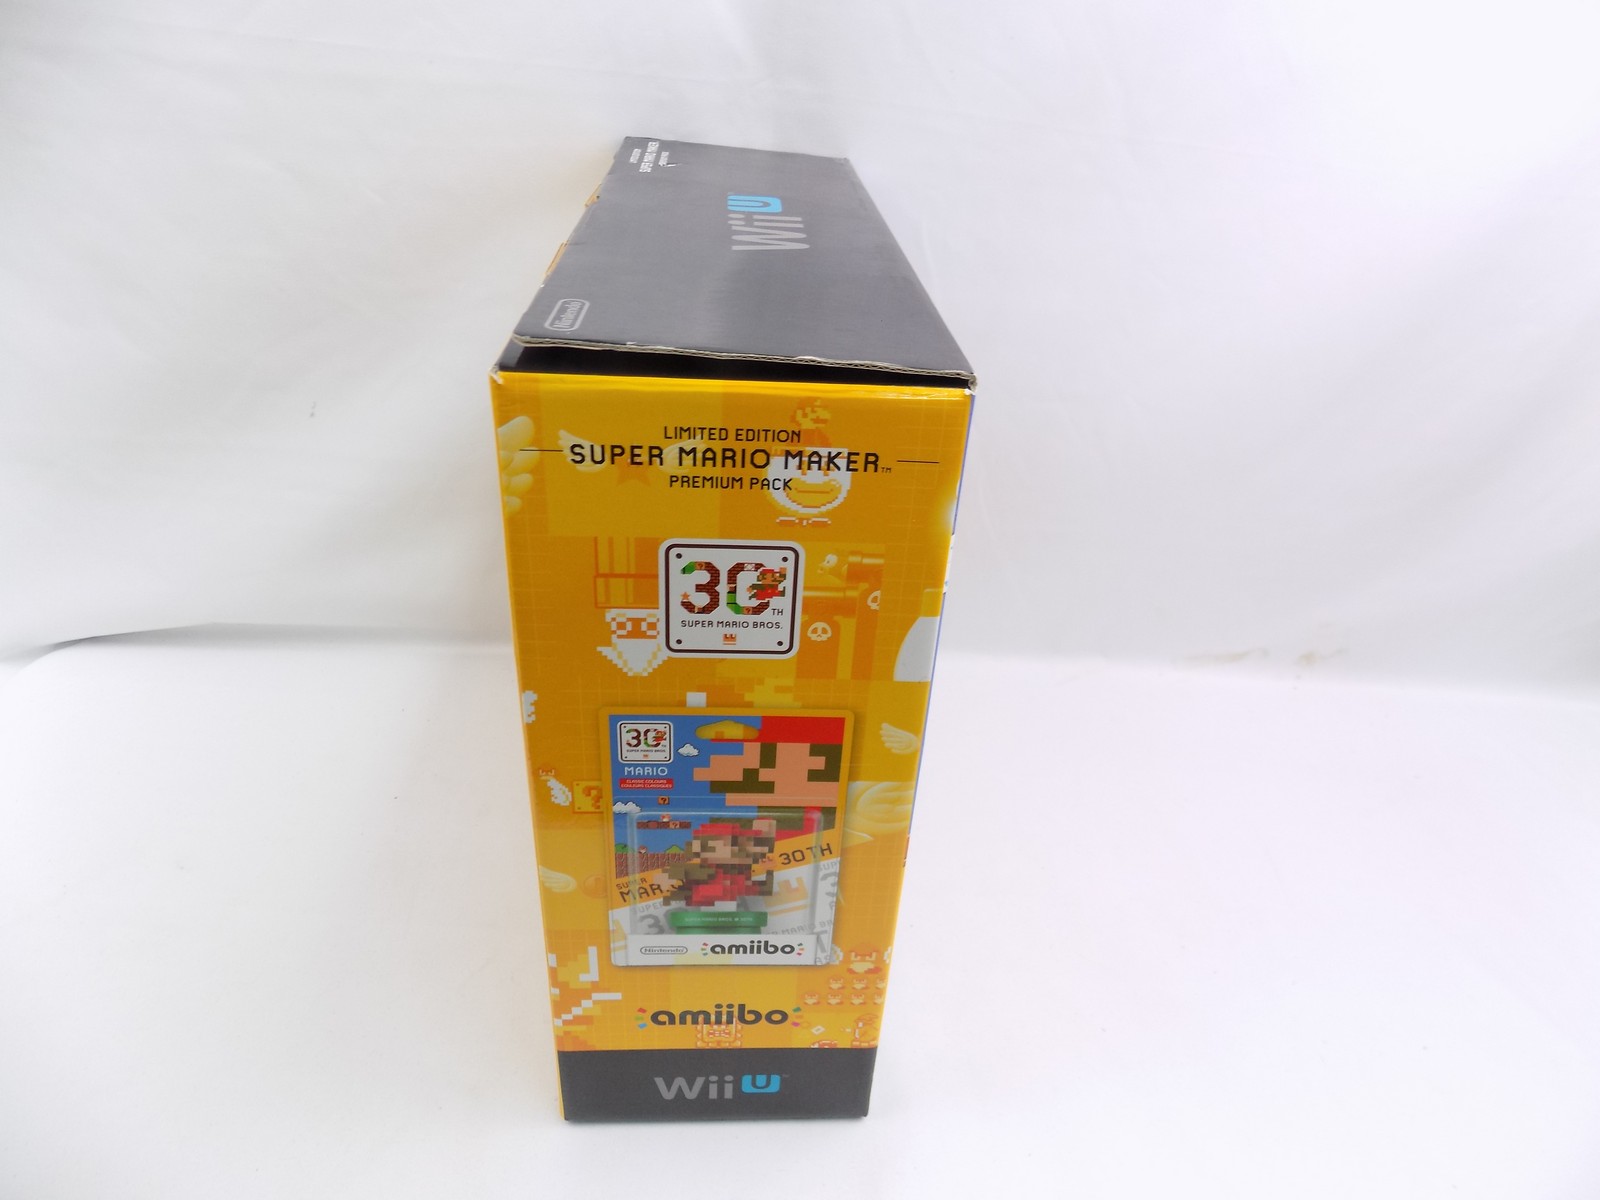 Nintendo Wii U Console - Super Mario Maker Deluxe Set - 32GB